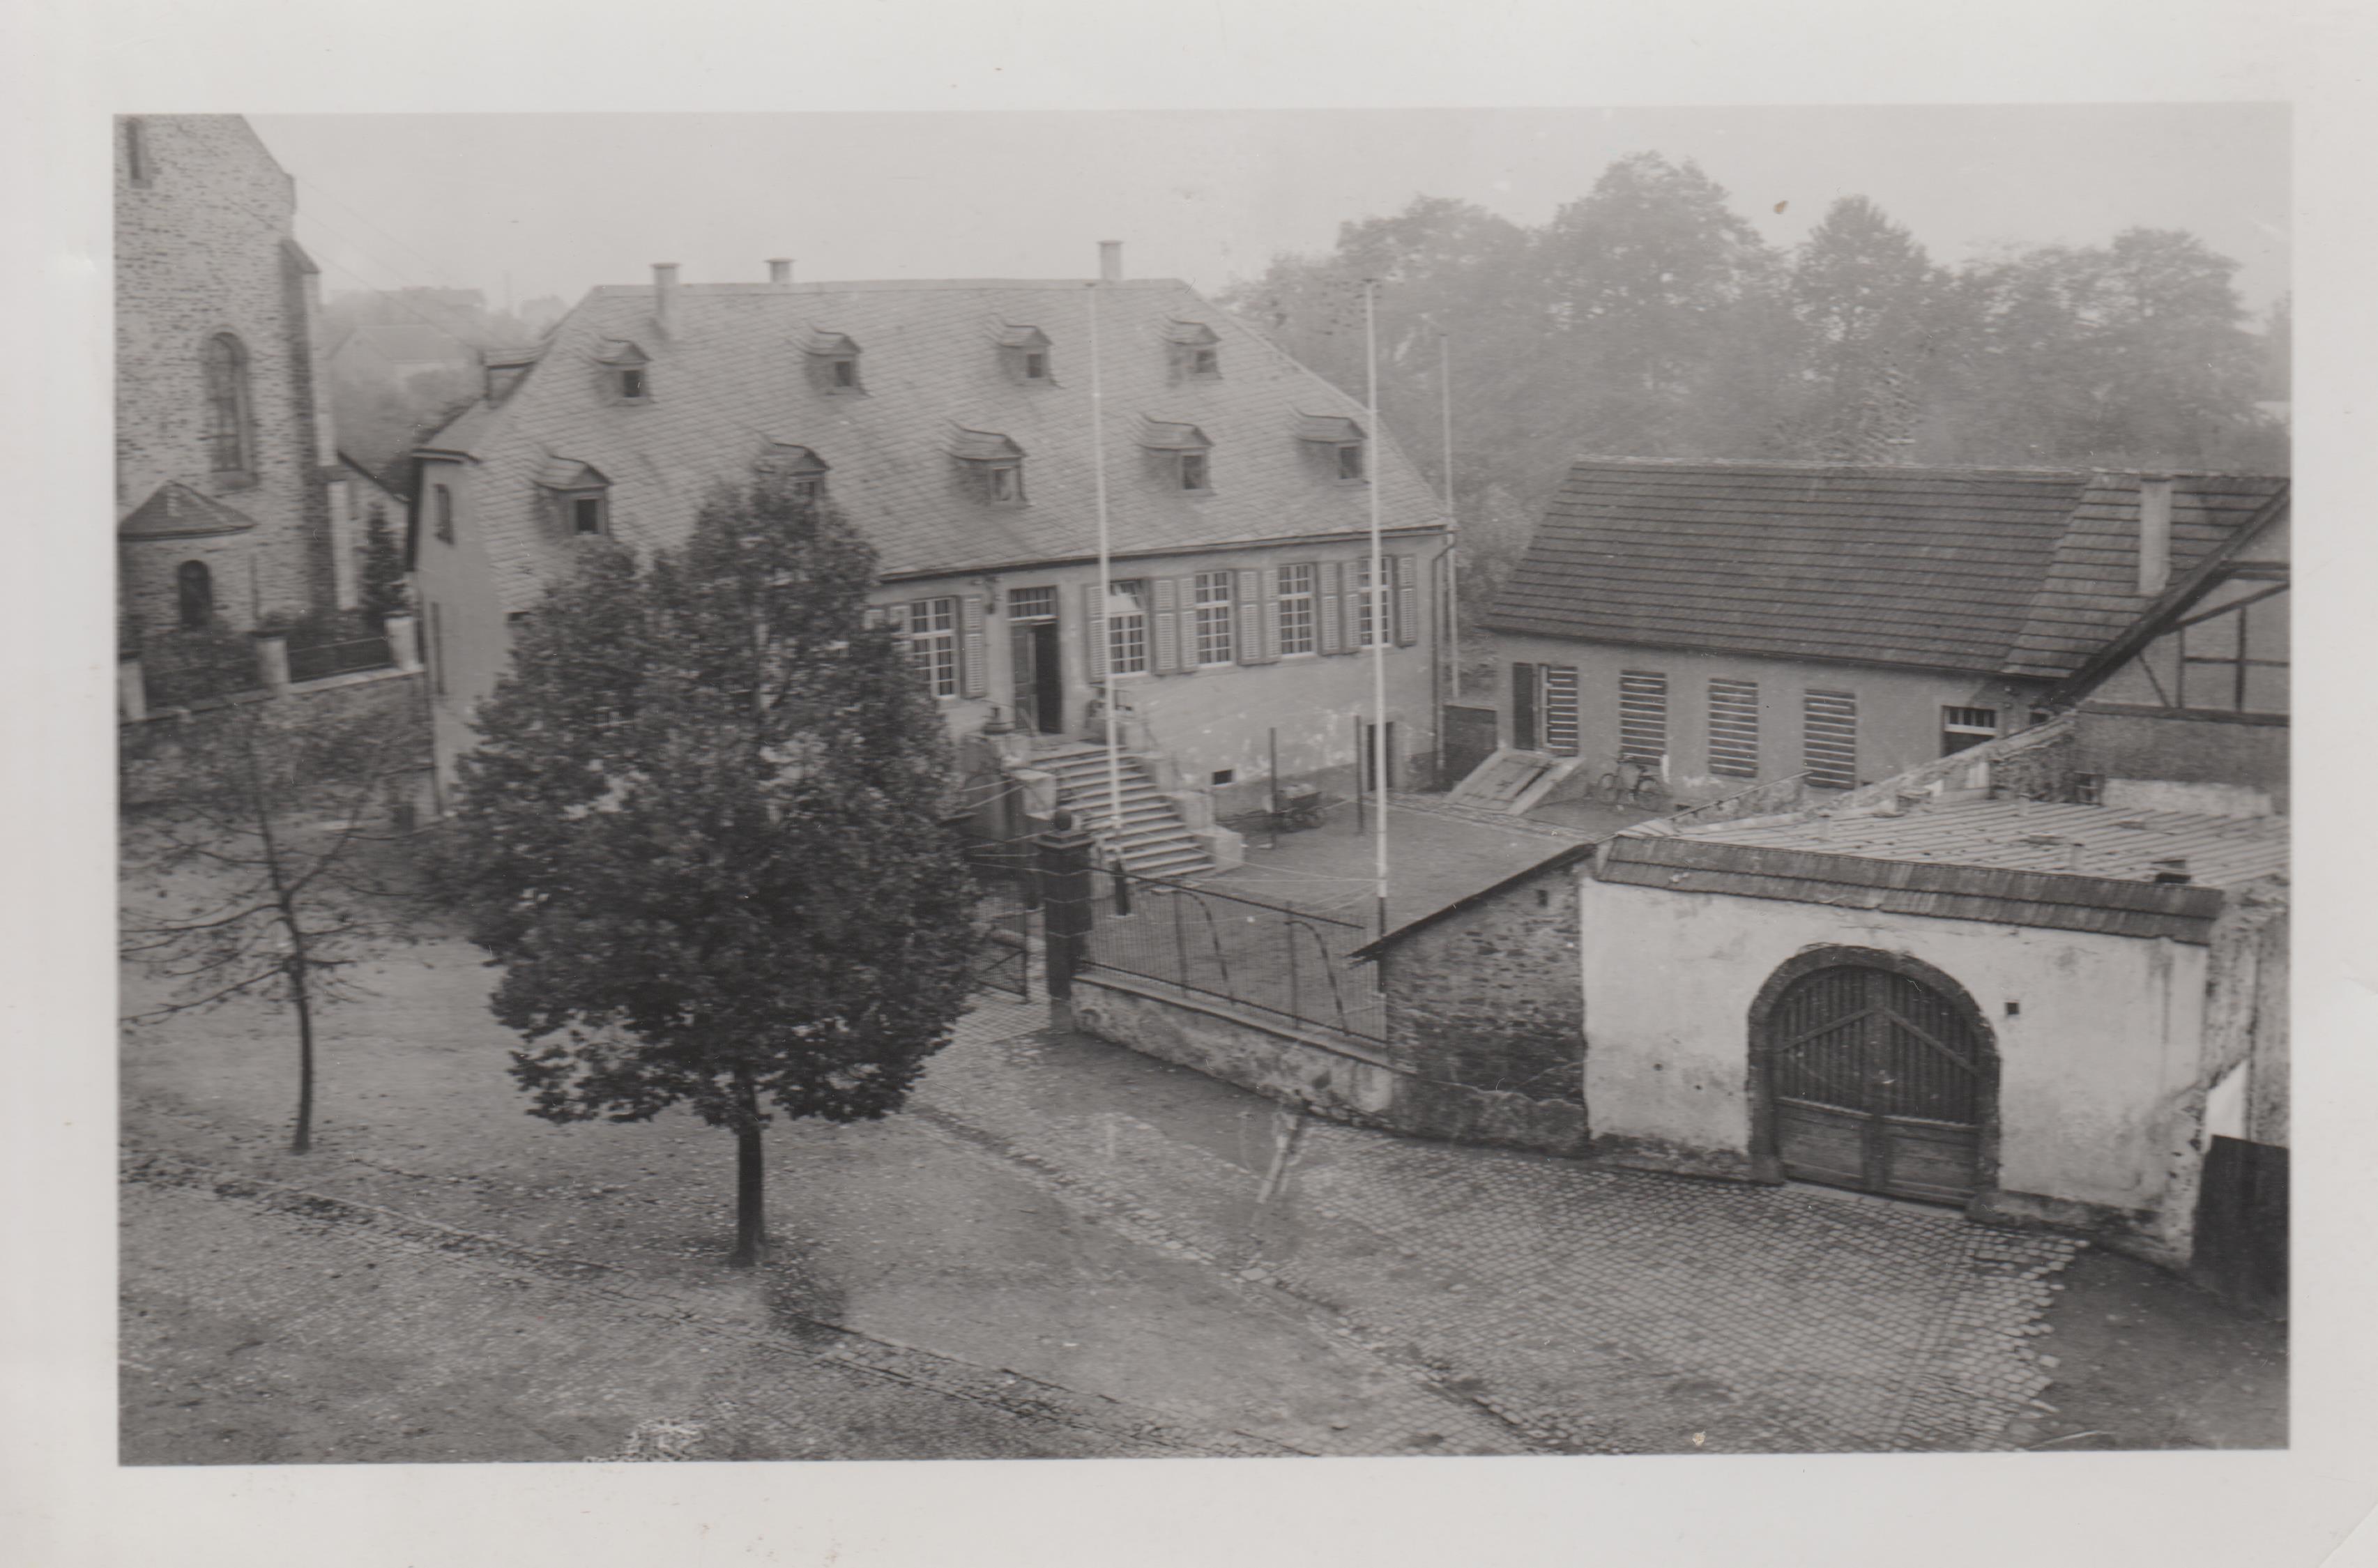 Ehemalige evangelische Schule Bendorf, 1937/38 (REM CC BY-NC-SA)